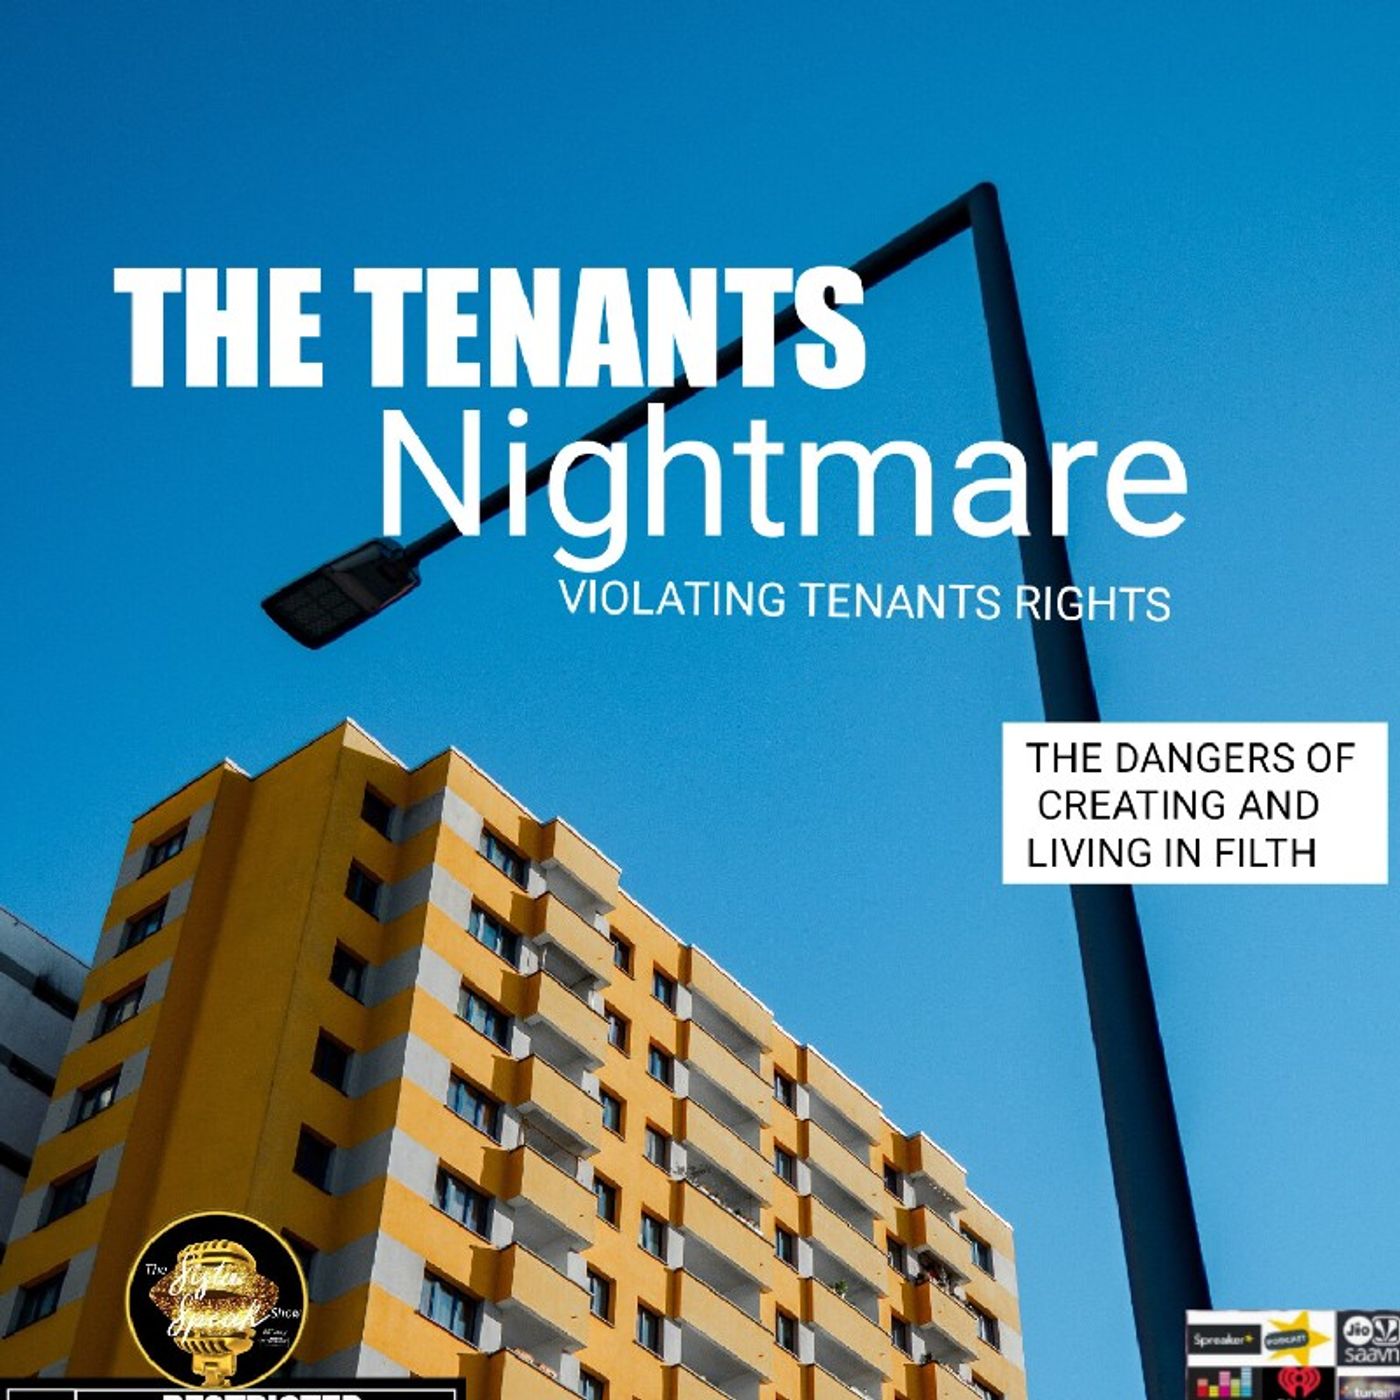 TCC-THE TENANTS NIGHTMARE